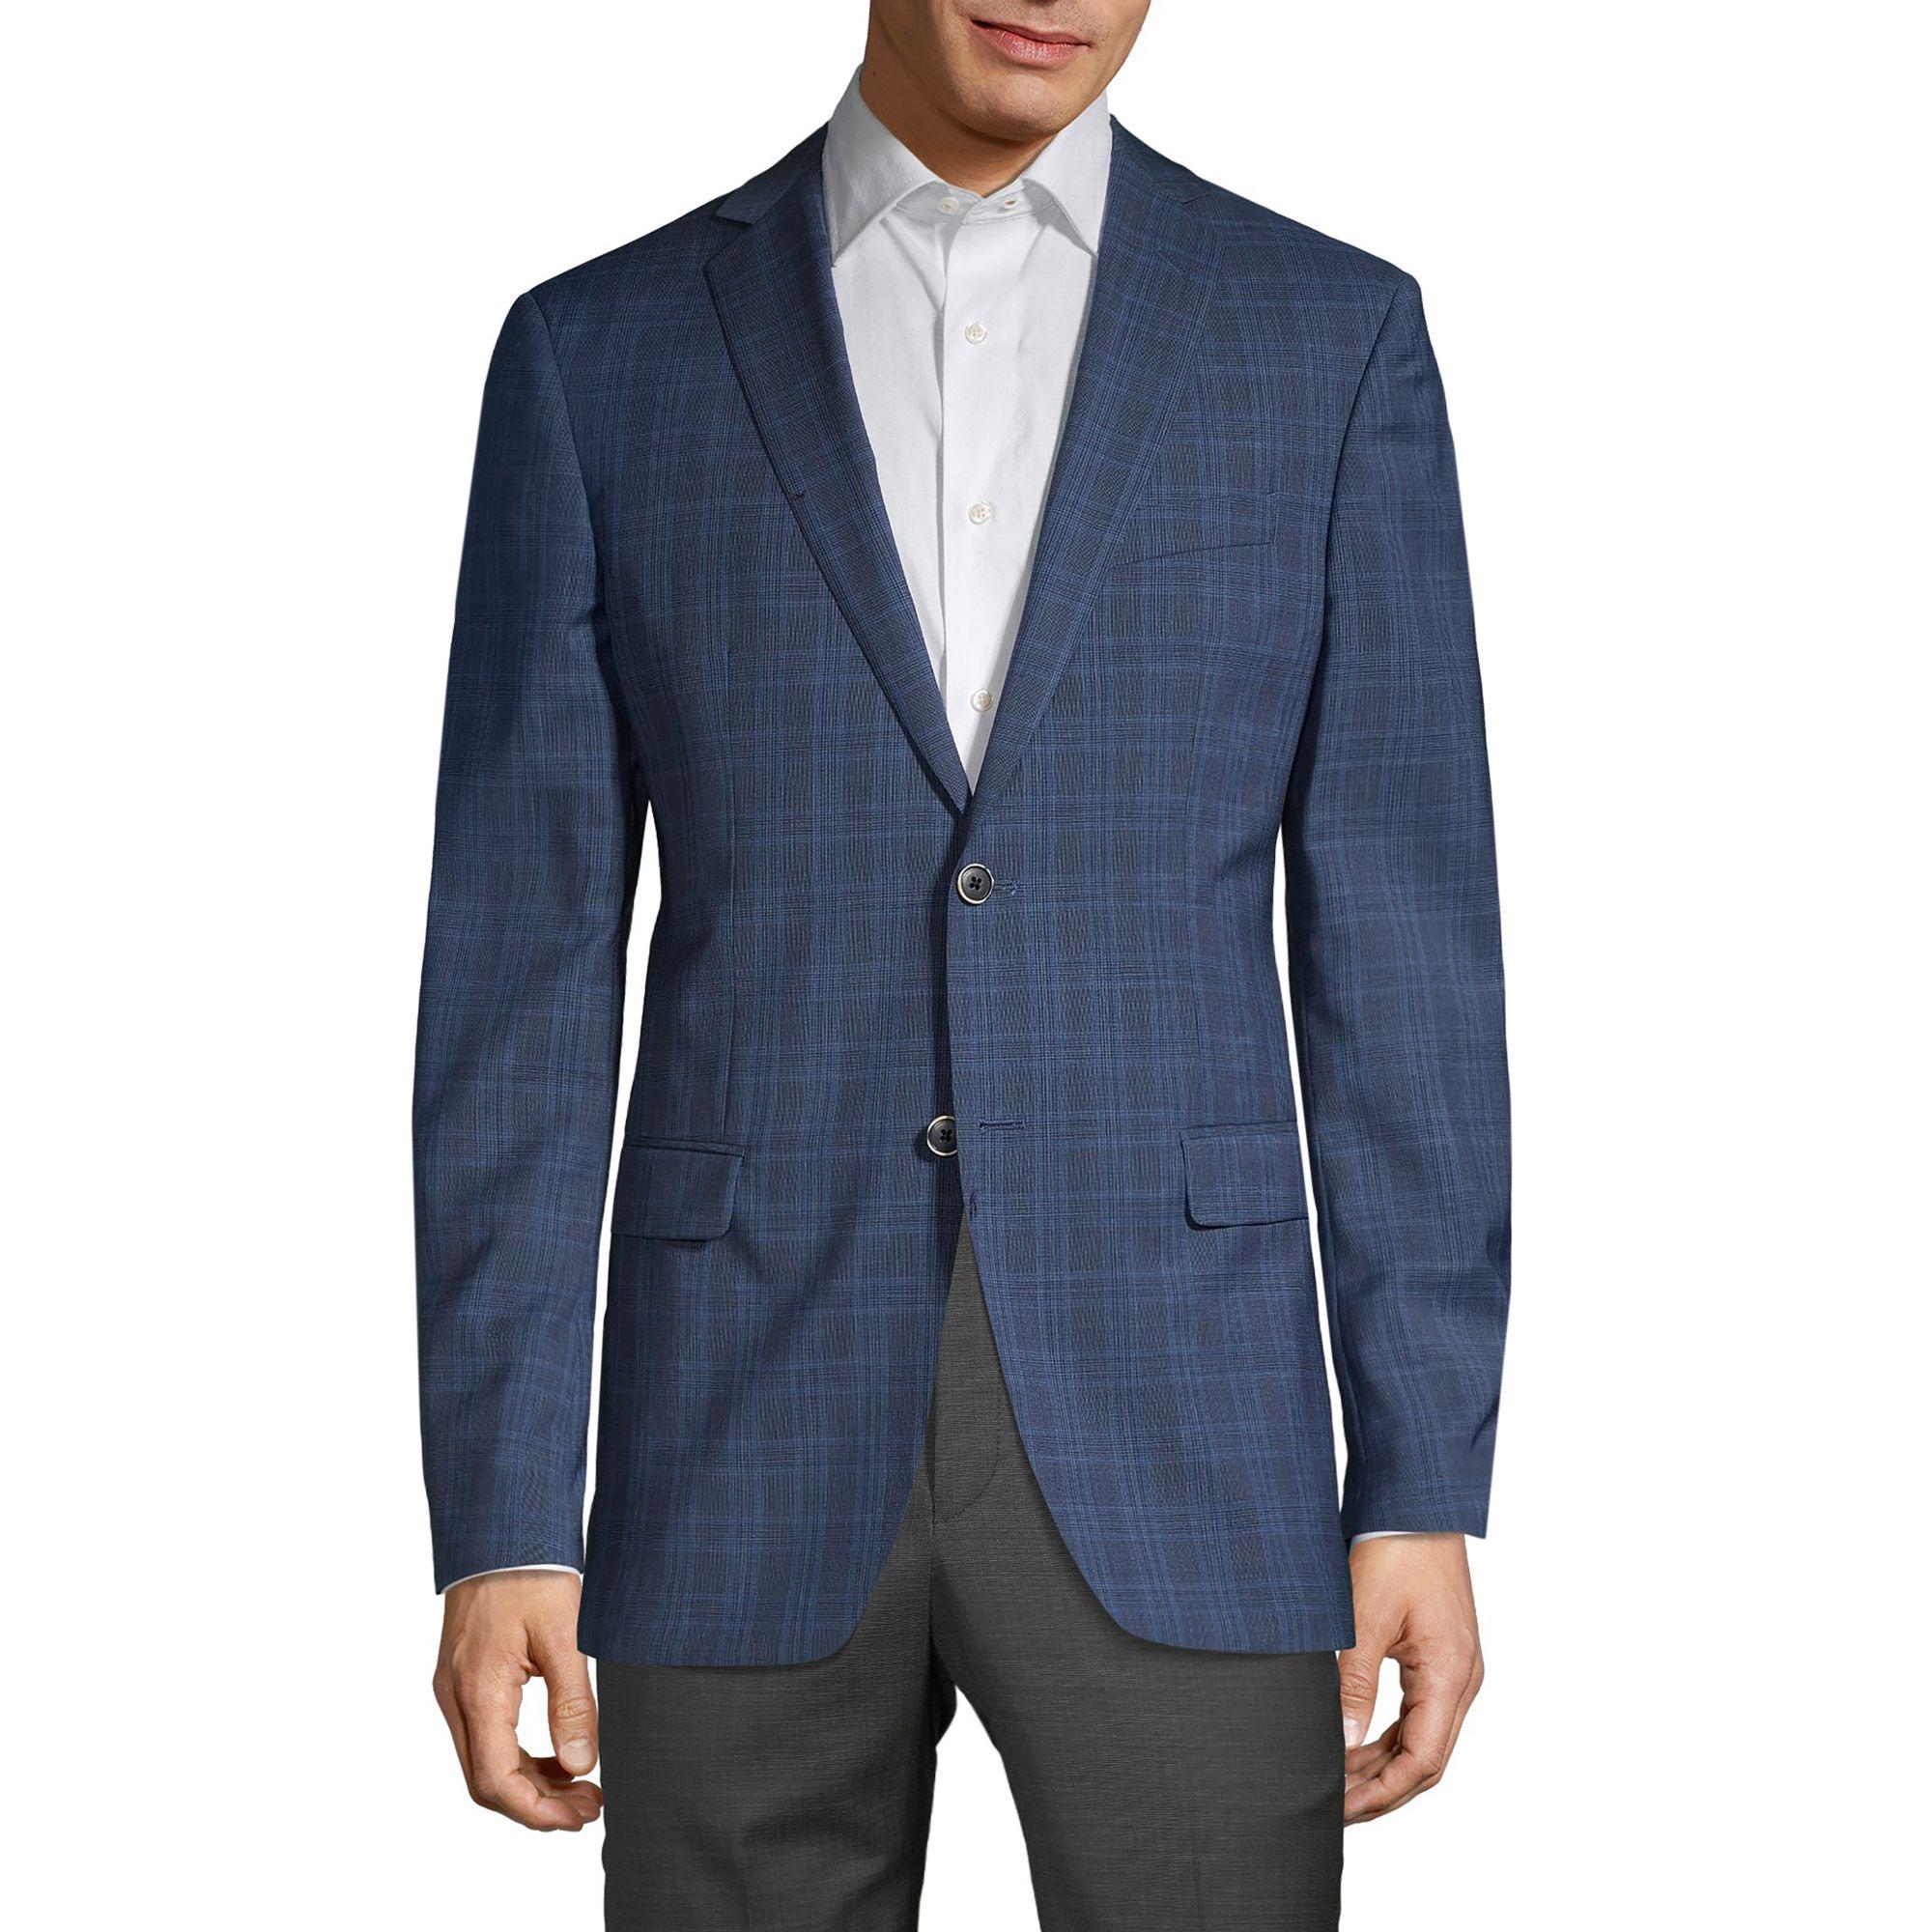 John Varvatos Plaid Modern-fit Wool Sportcoat in Blue for Men - Lyst